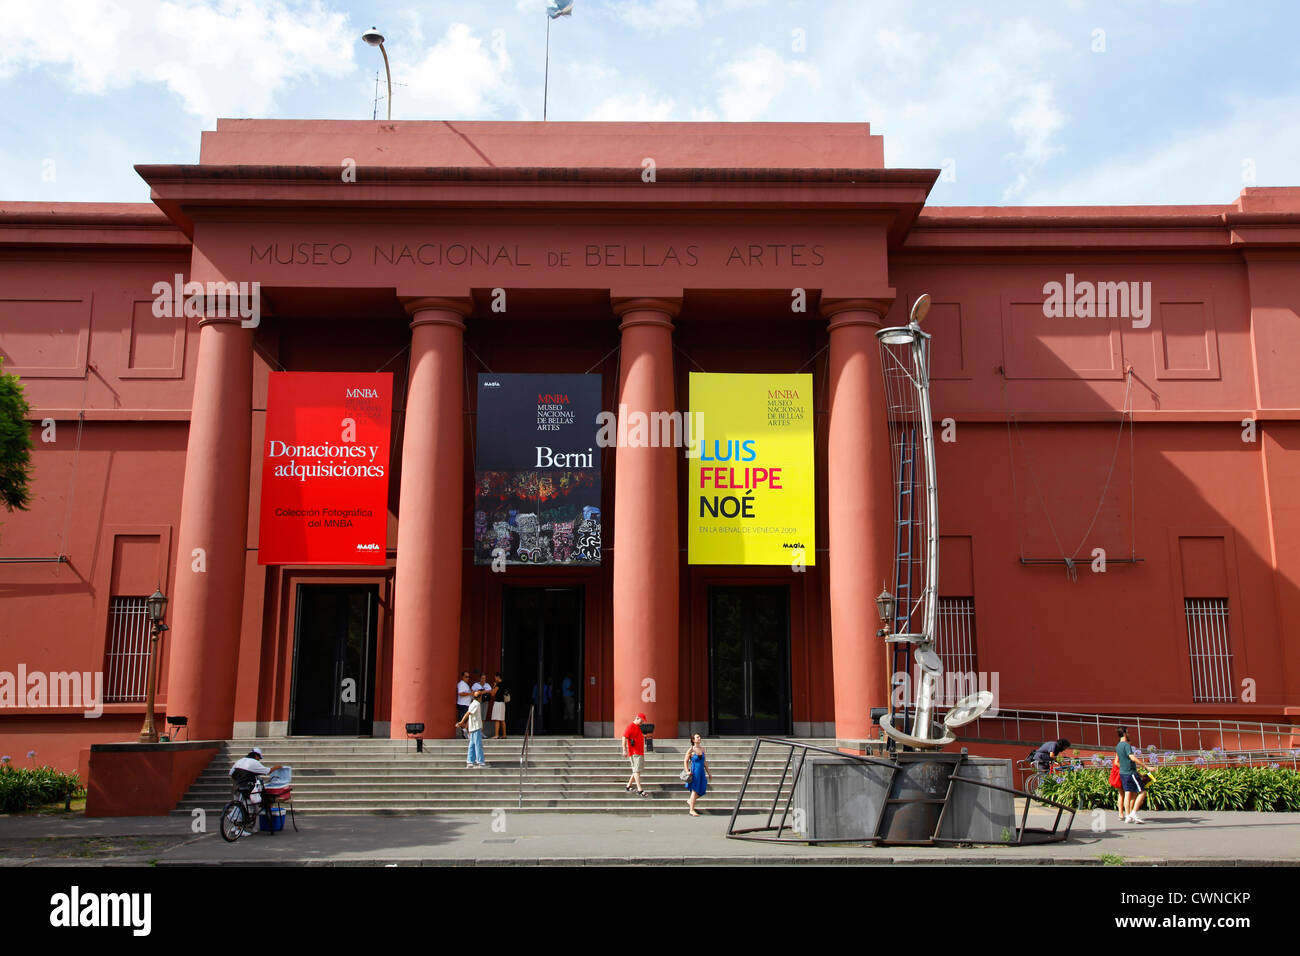 Museo Nacional de Bellas Artes, Buenos Aires, Argentina Stock Photo